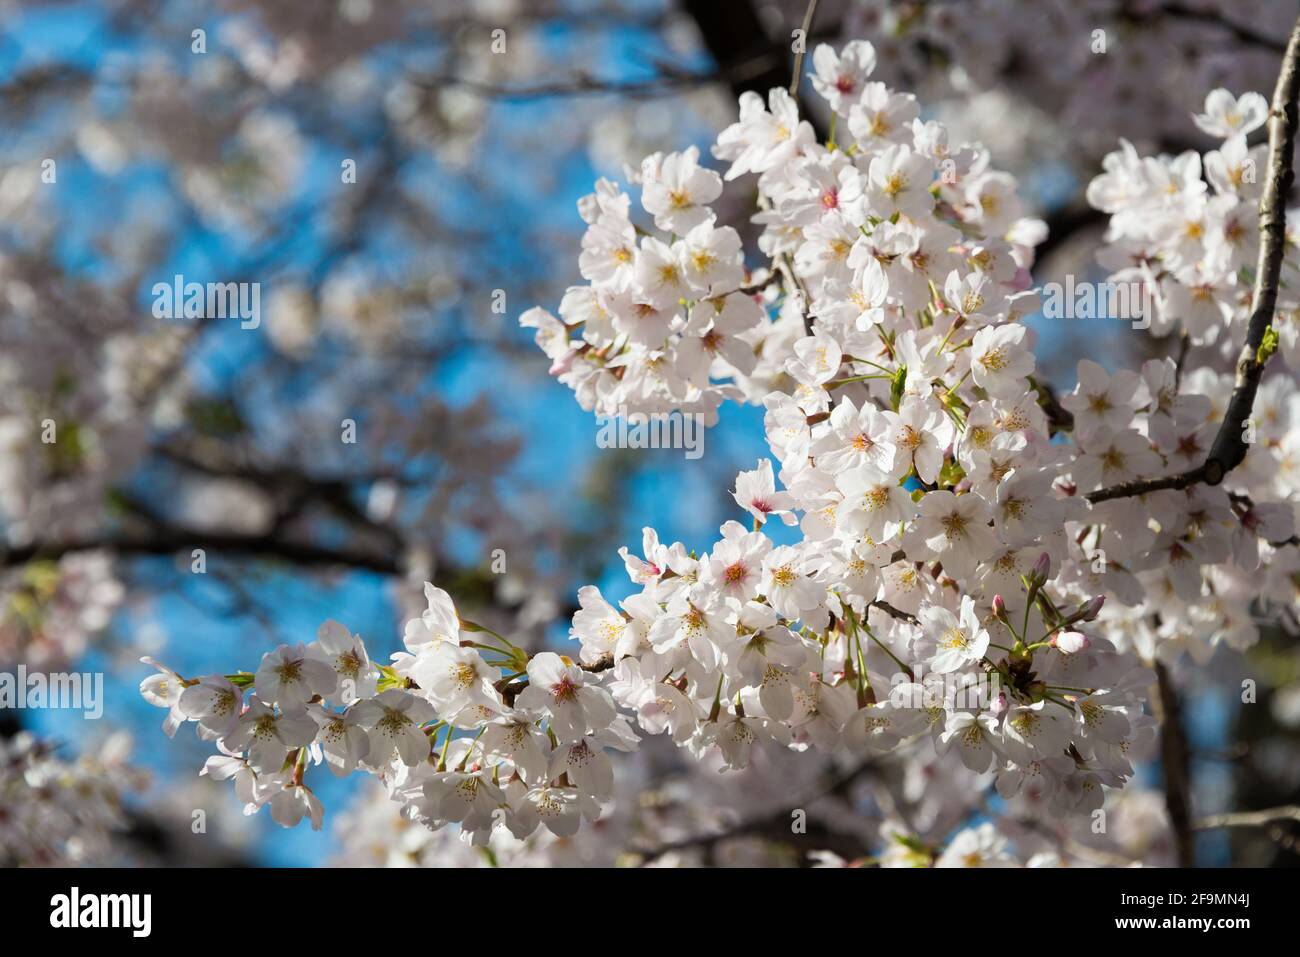 Tokyo, Japan - Cherry blossoms in Ueno Toshogu Shrine, Ueno Park, Taito, Tokyo, Japan. Stock Photo